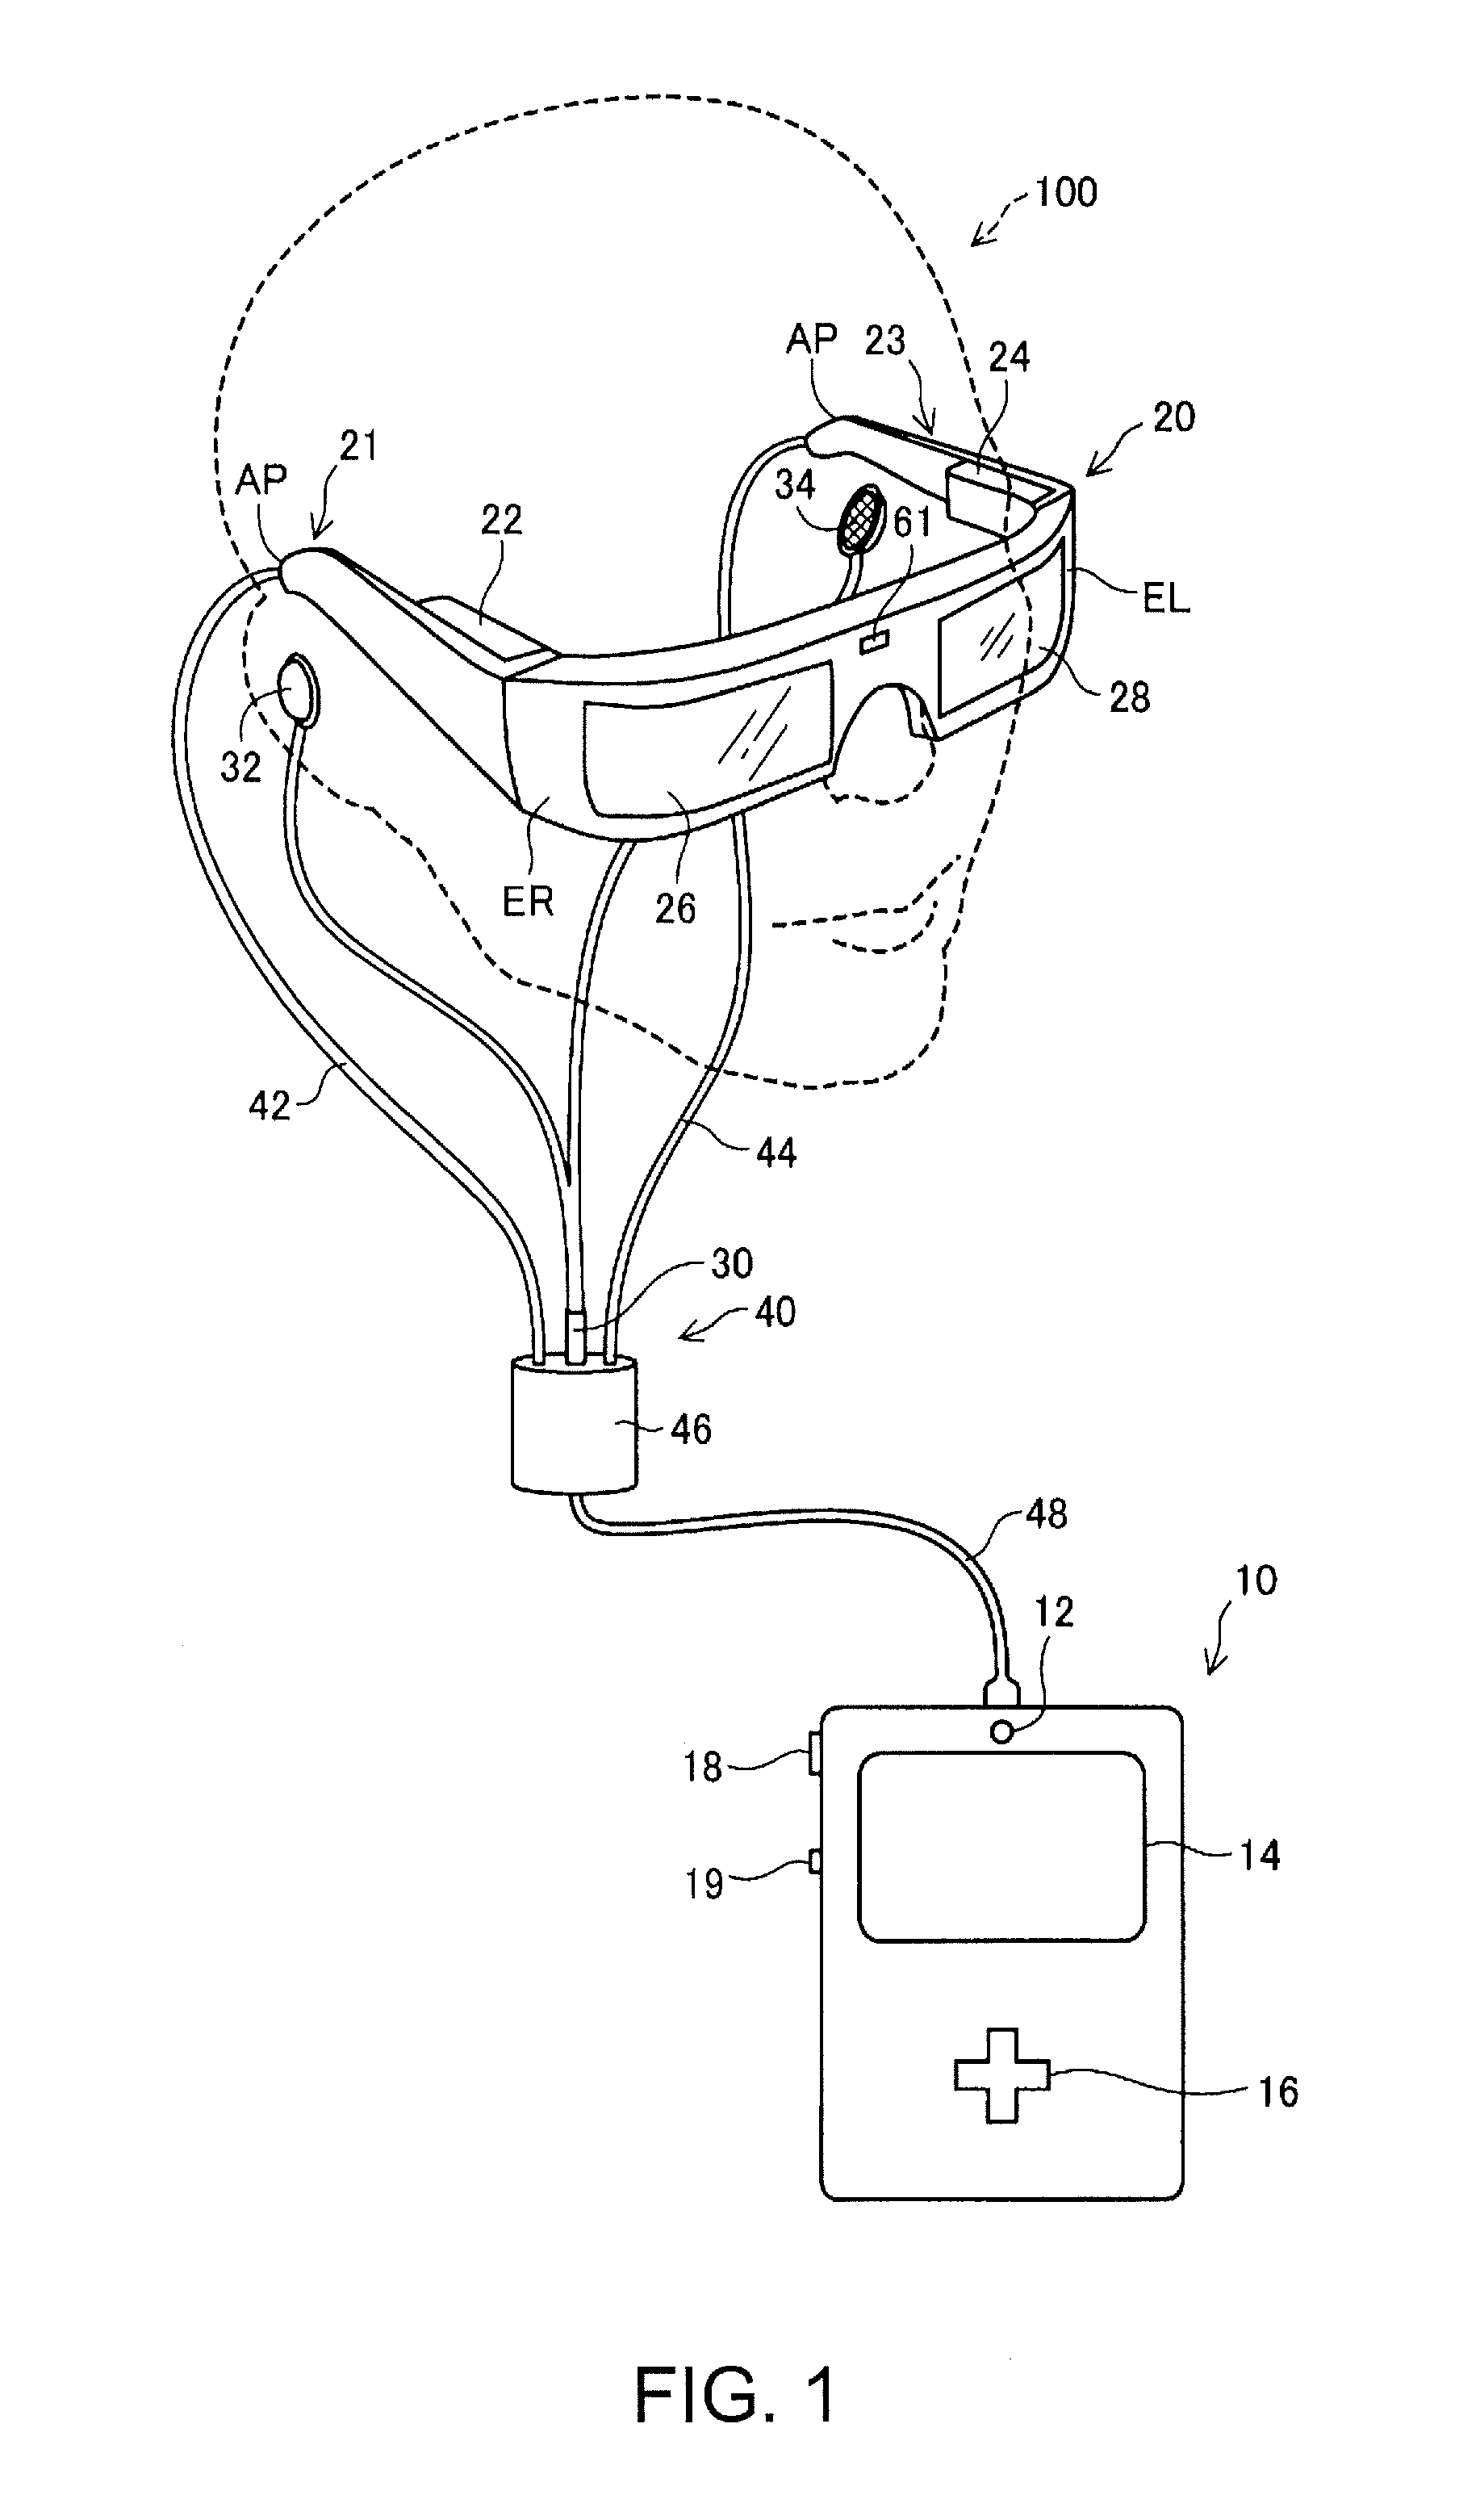 Head mounted display apparatus